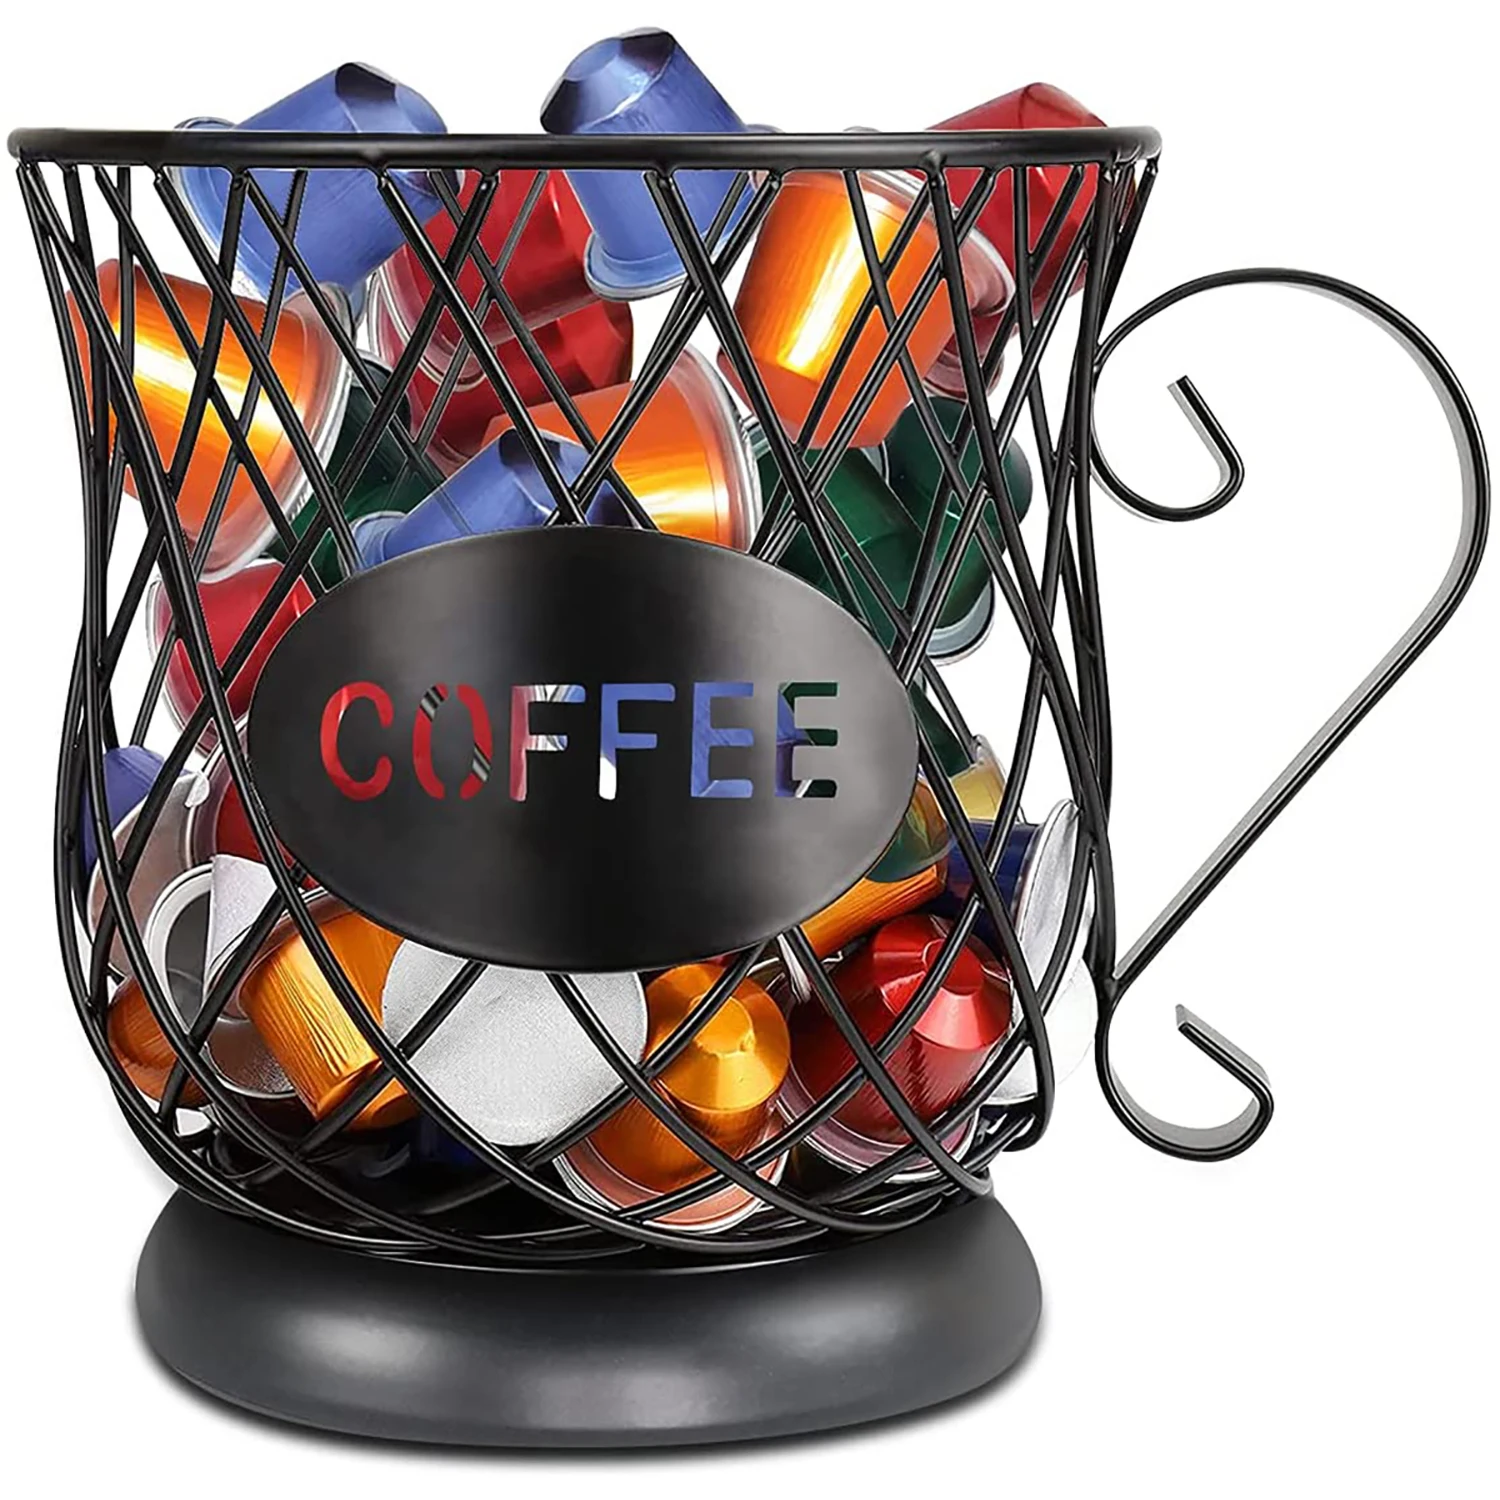 

K Cup Holder Large Capacity Keurig Espresso Coffee Pod Holder Organizer for Counter Coffee Bar Coffee Pod Capsule Storage